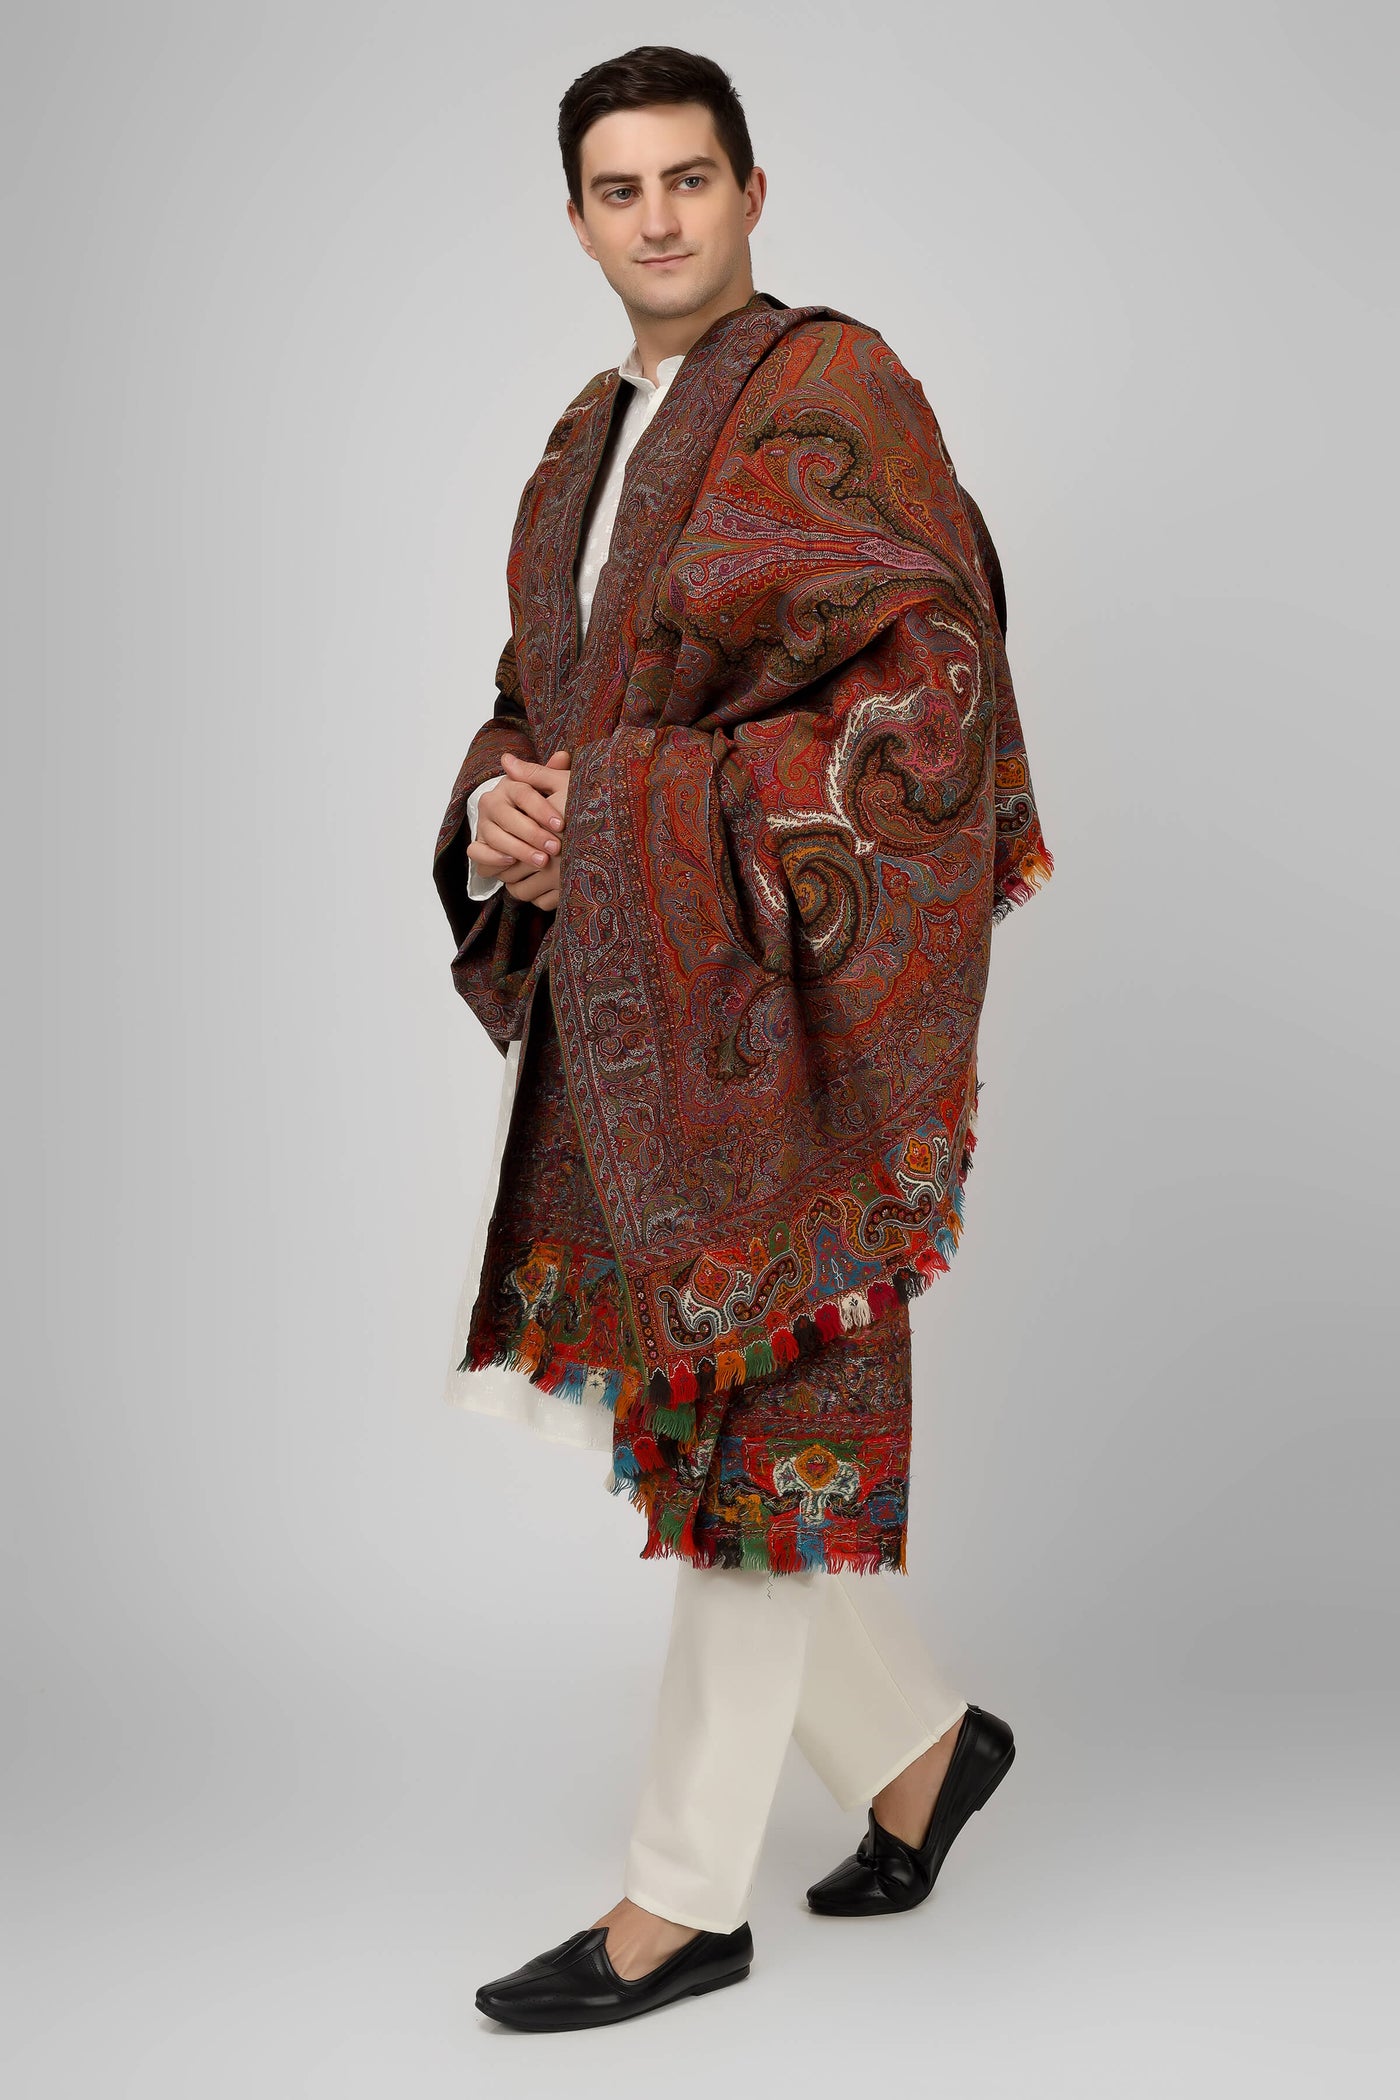 DELHI - antique kashmir long shawl ,Vintage Kashmir Long Shawl - Full Size, Traditional Design